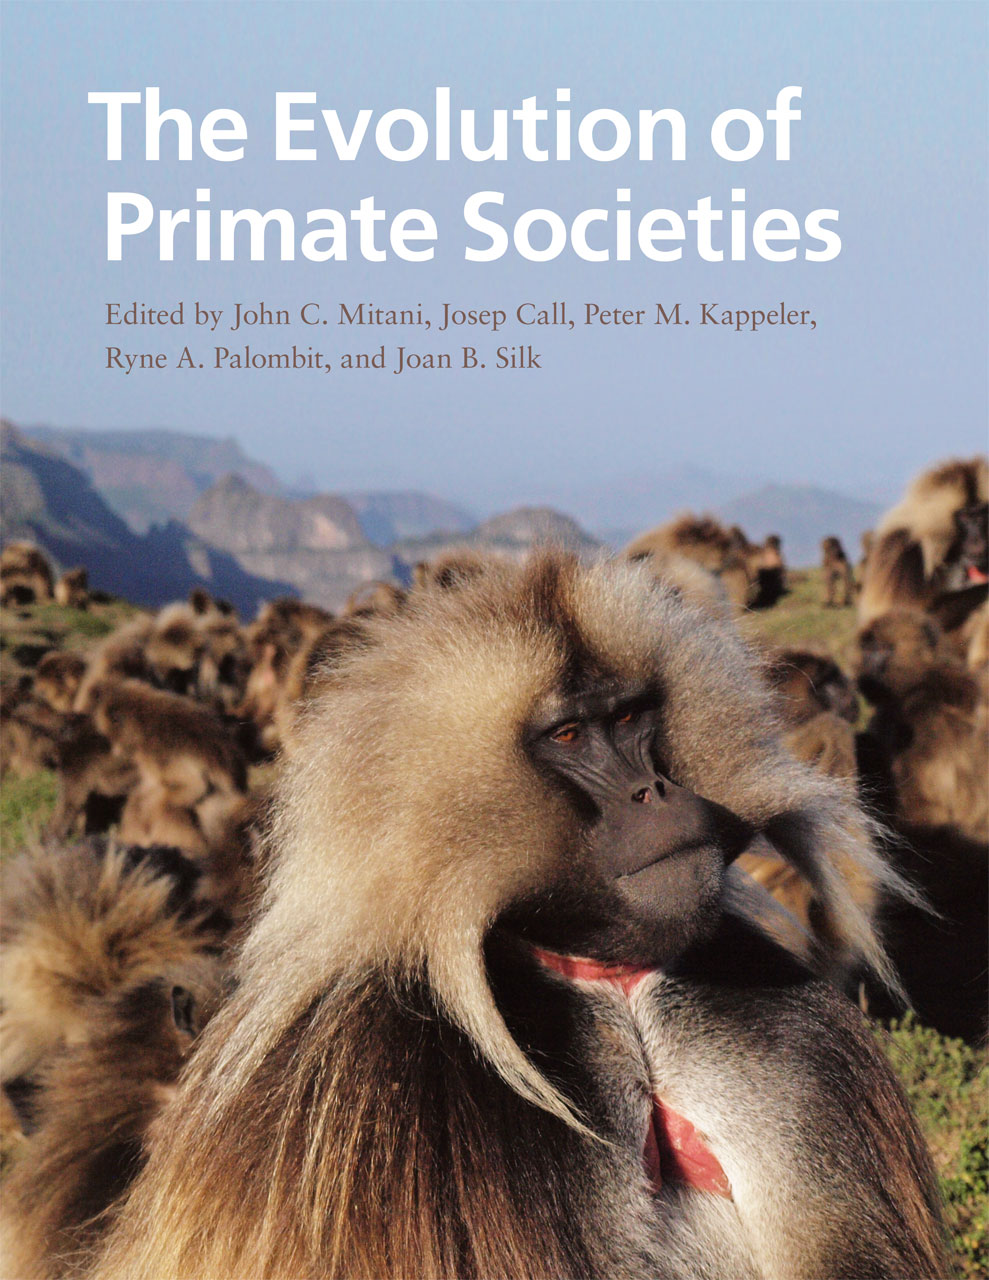 The Evolution of Primate Societies, Mitani, Call, Kappeler